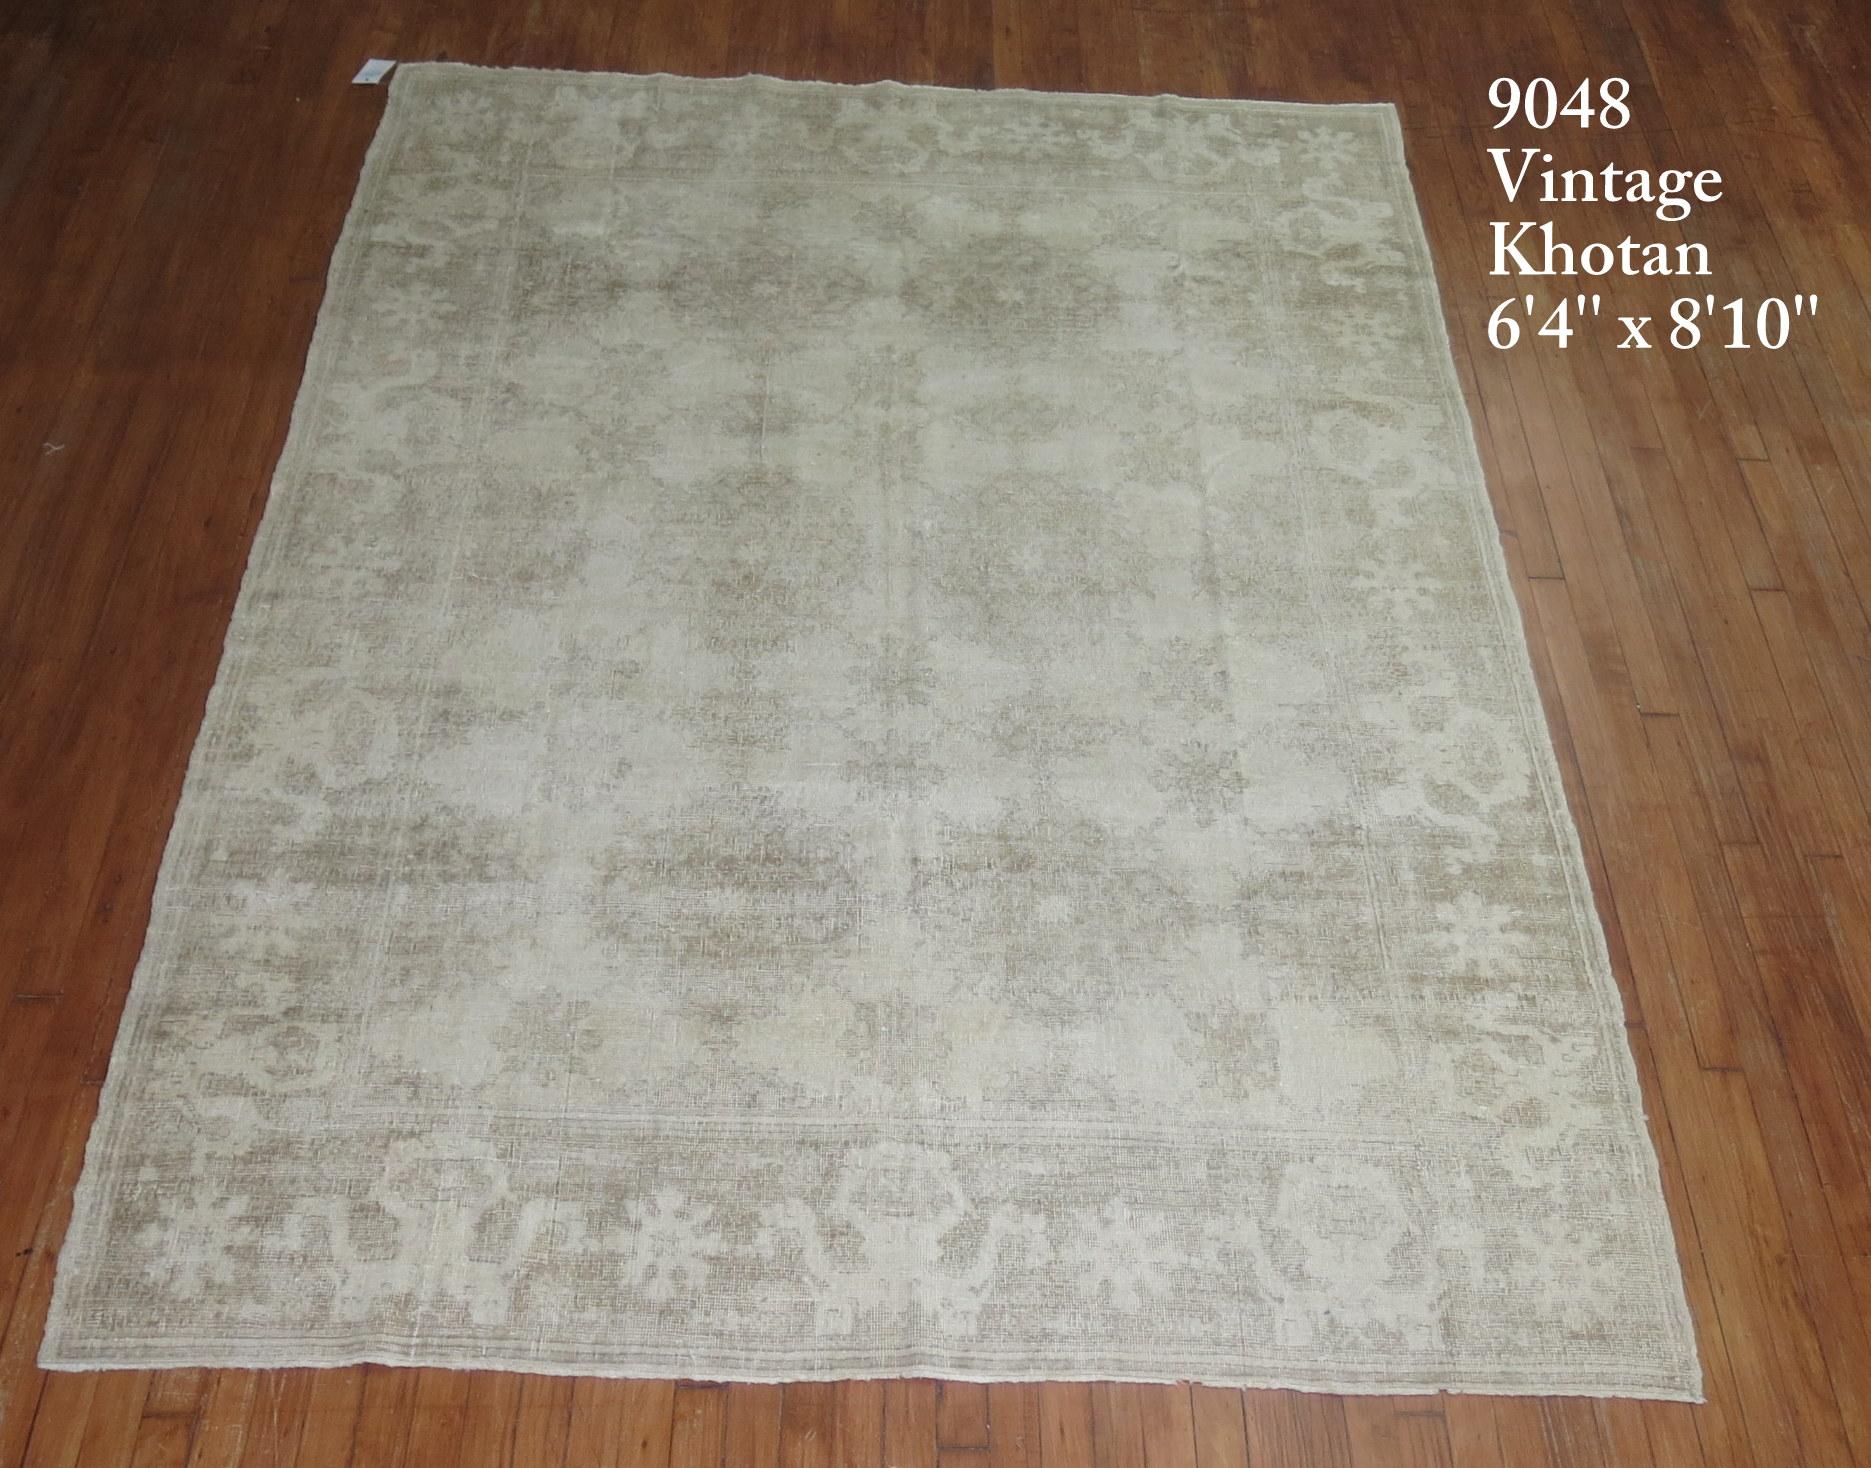 A mid-20th century weather textured or distressed East Turkestan Khotan rug.